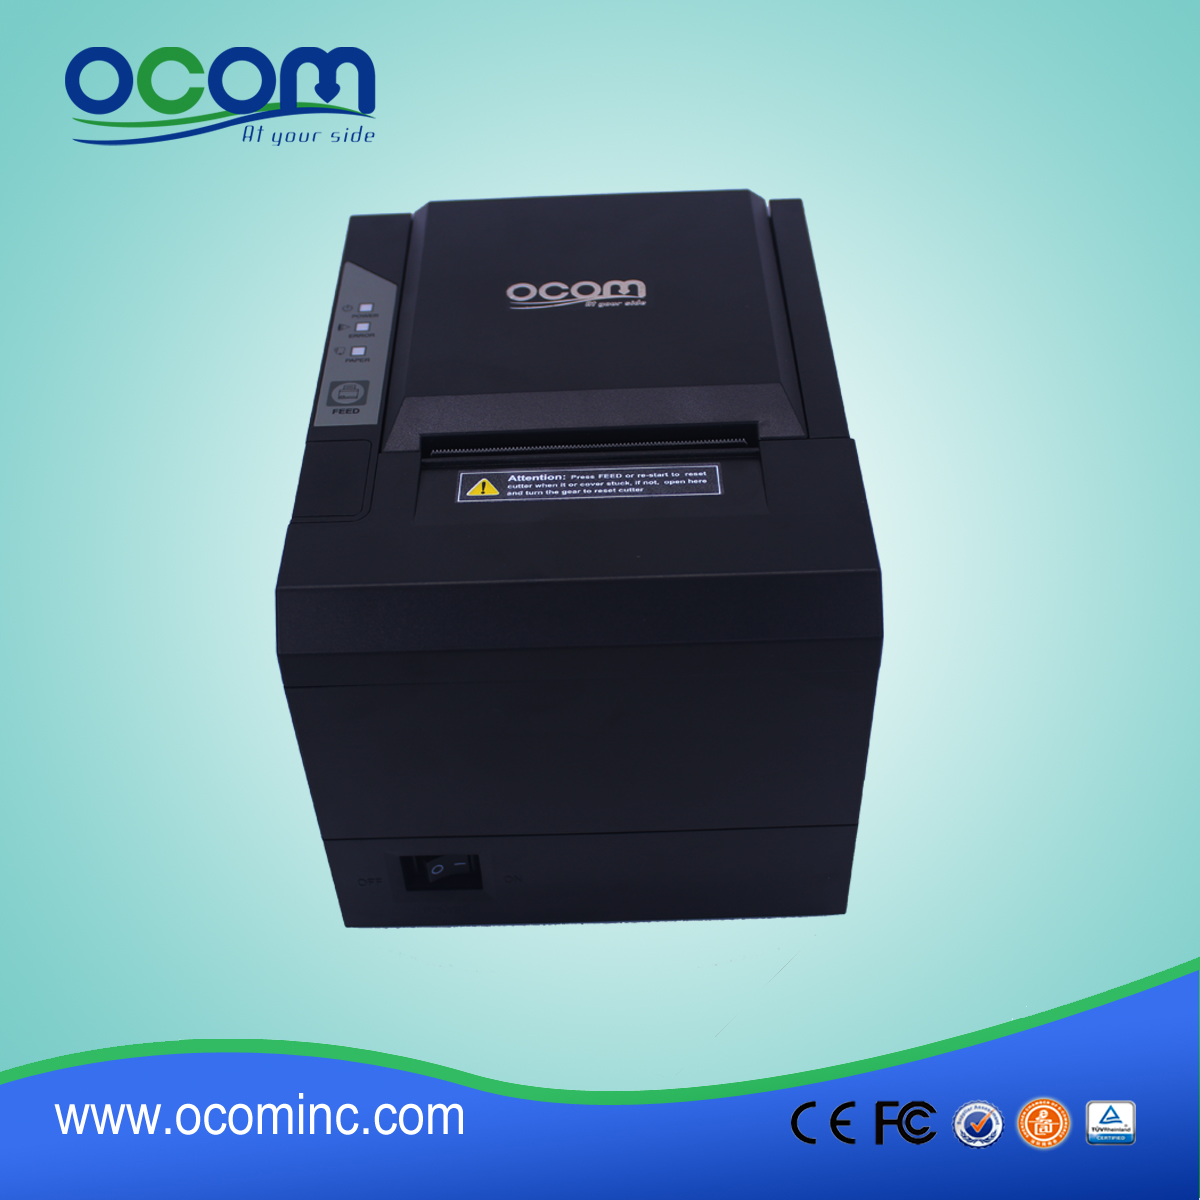 (OCPP-80 g) China 80 mm Thermal Empfang Printer Lieferant